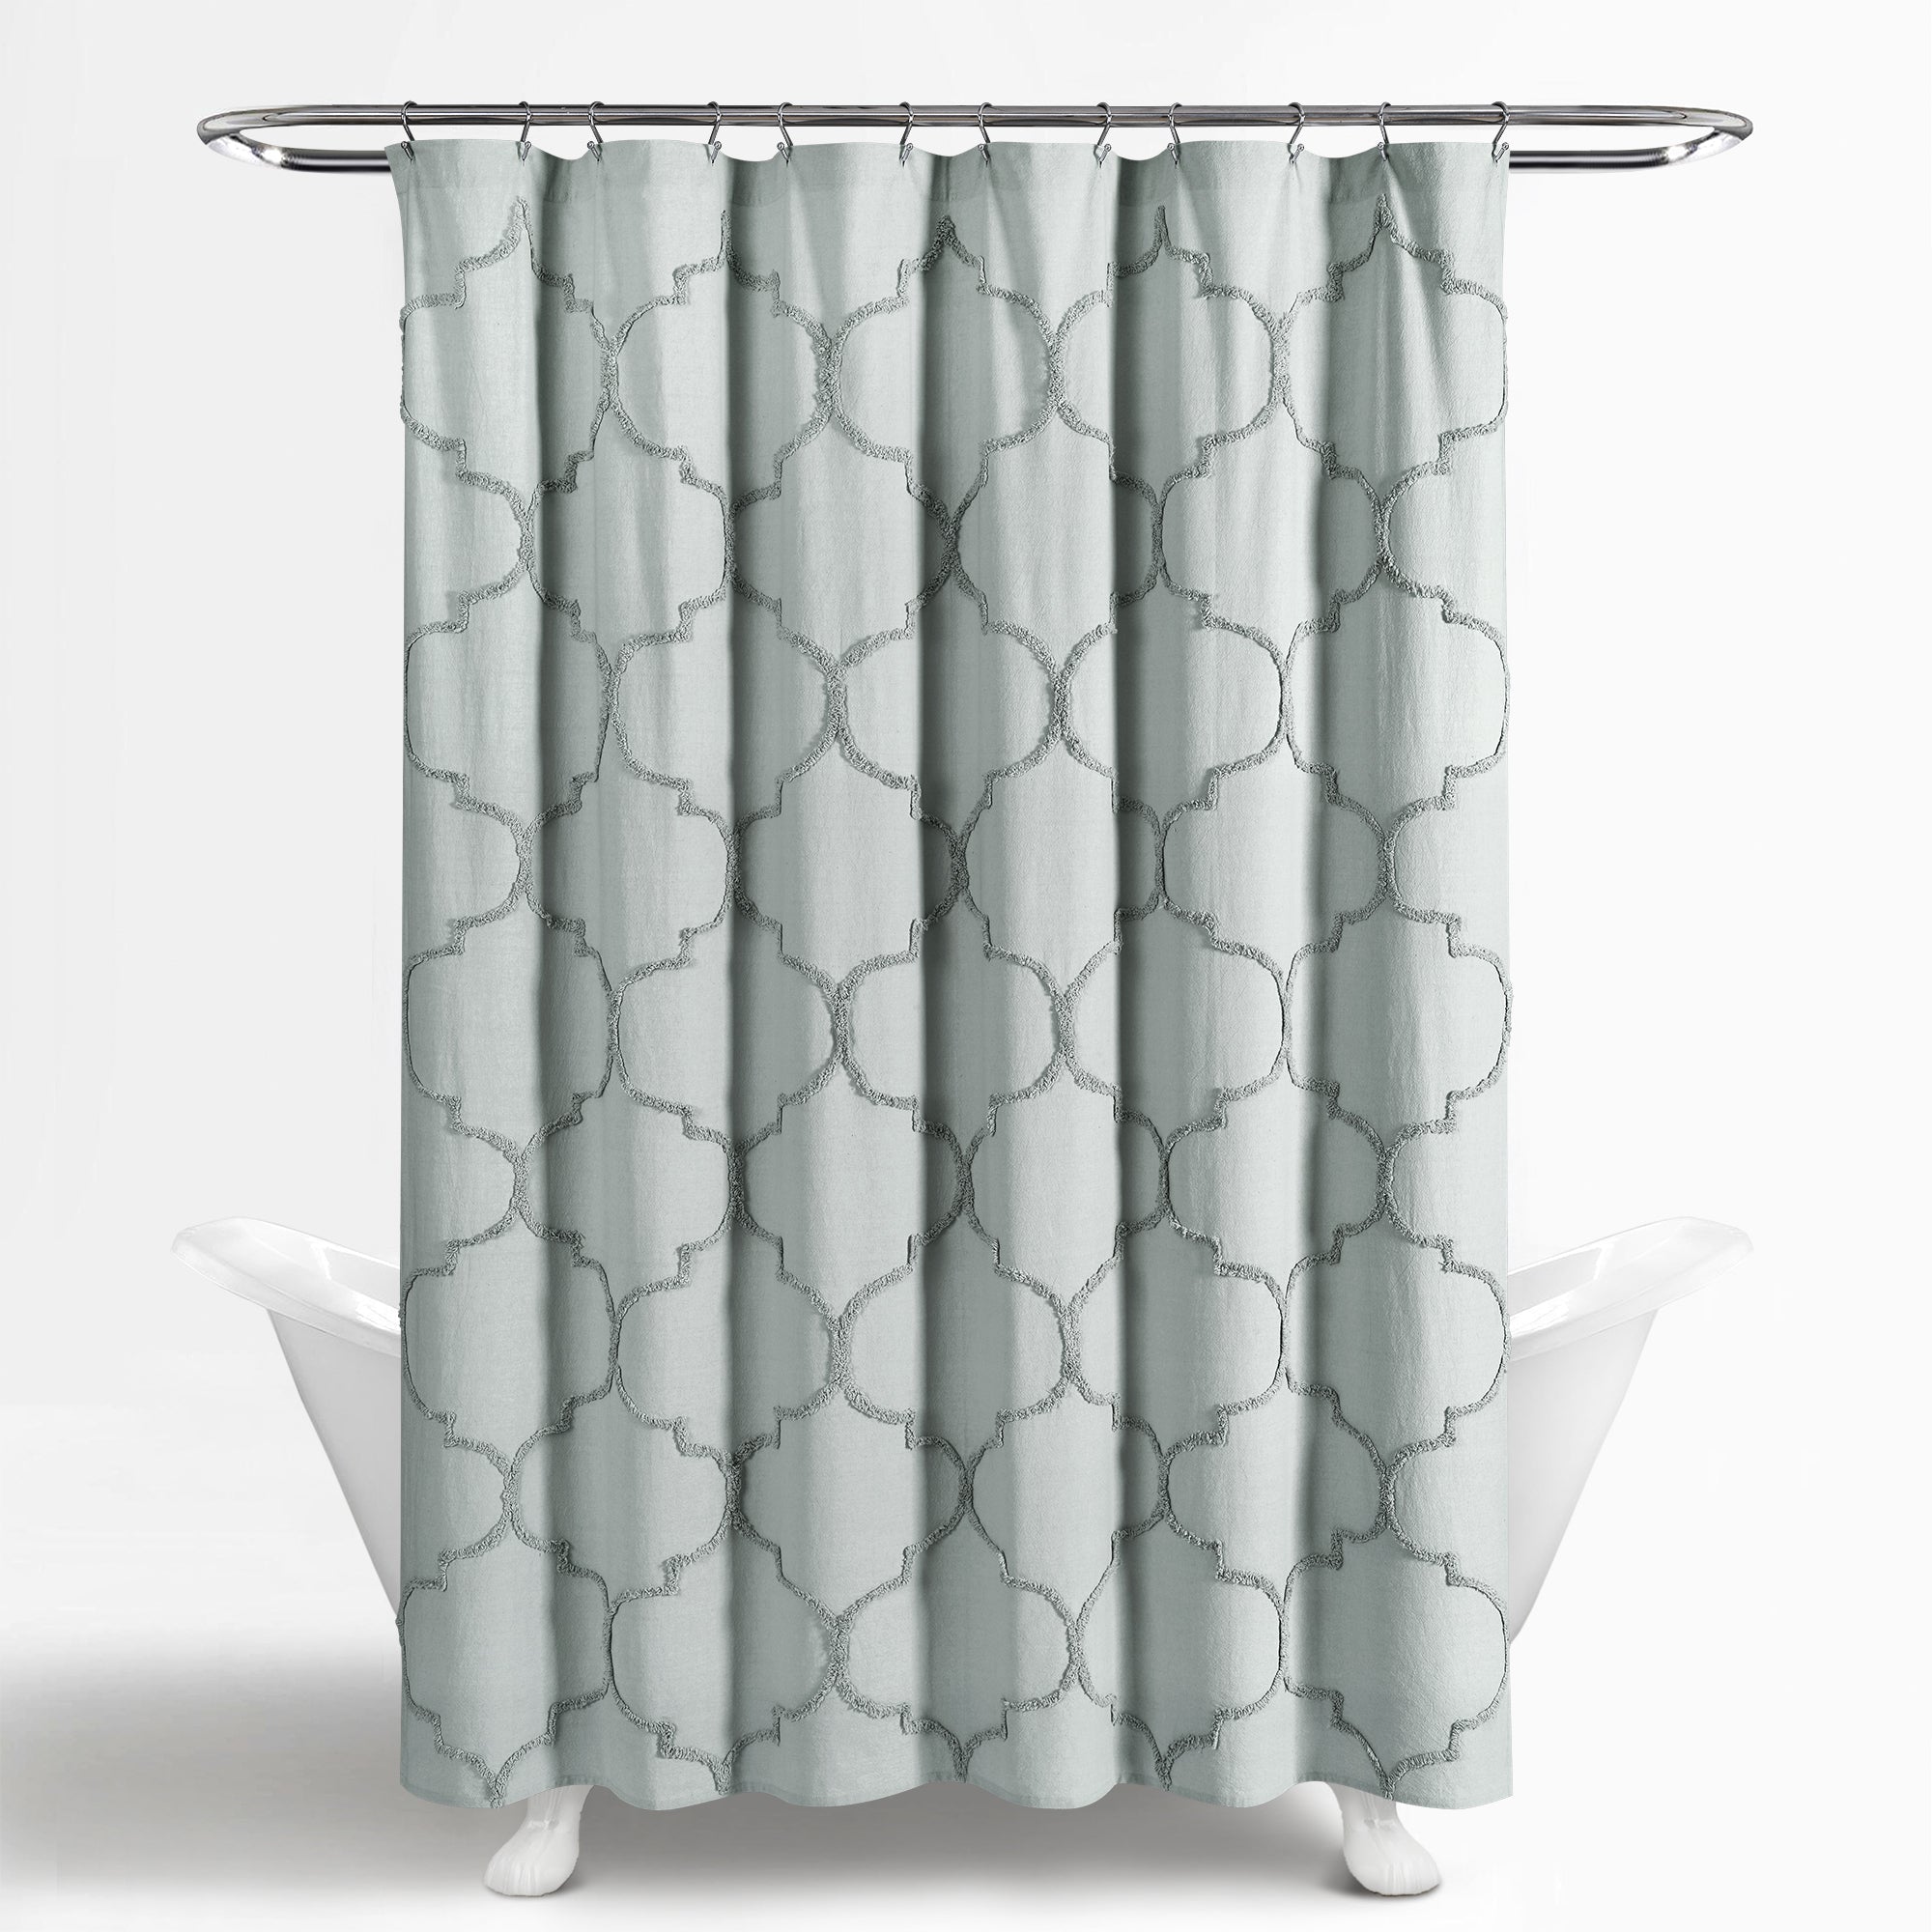 Avon Chenille Trellis Shower Curtain